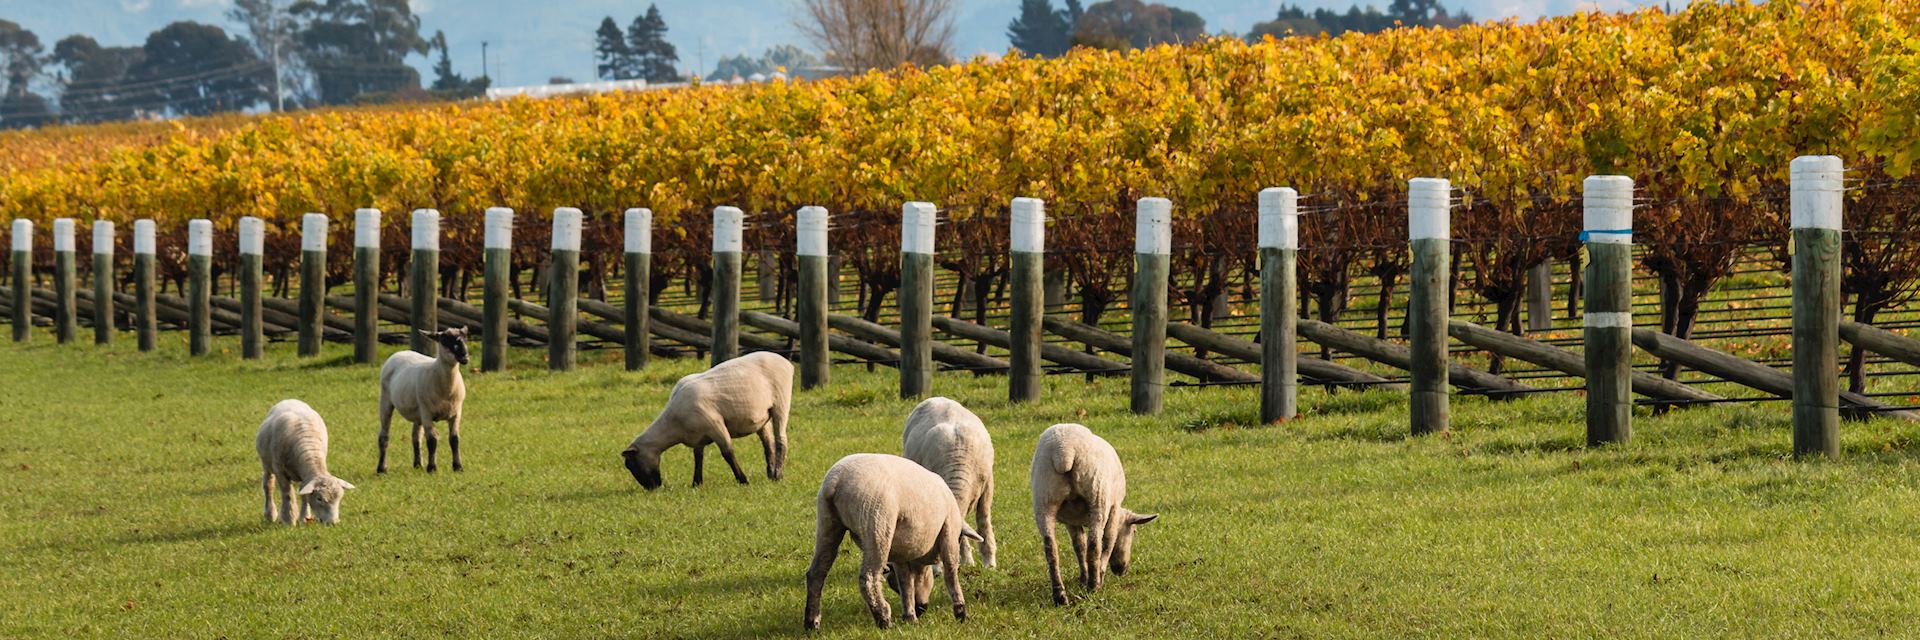 Sheep grazing at a vineyard in Blenheim